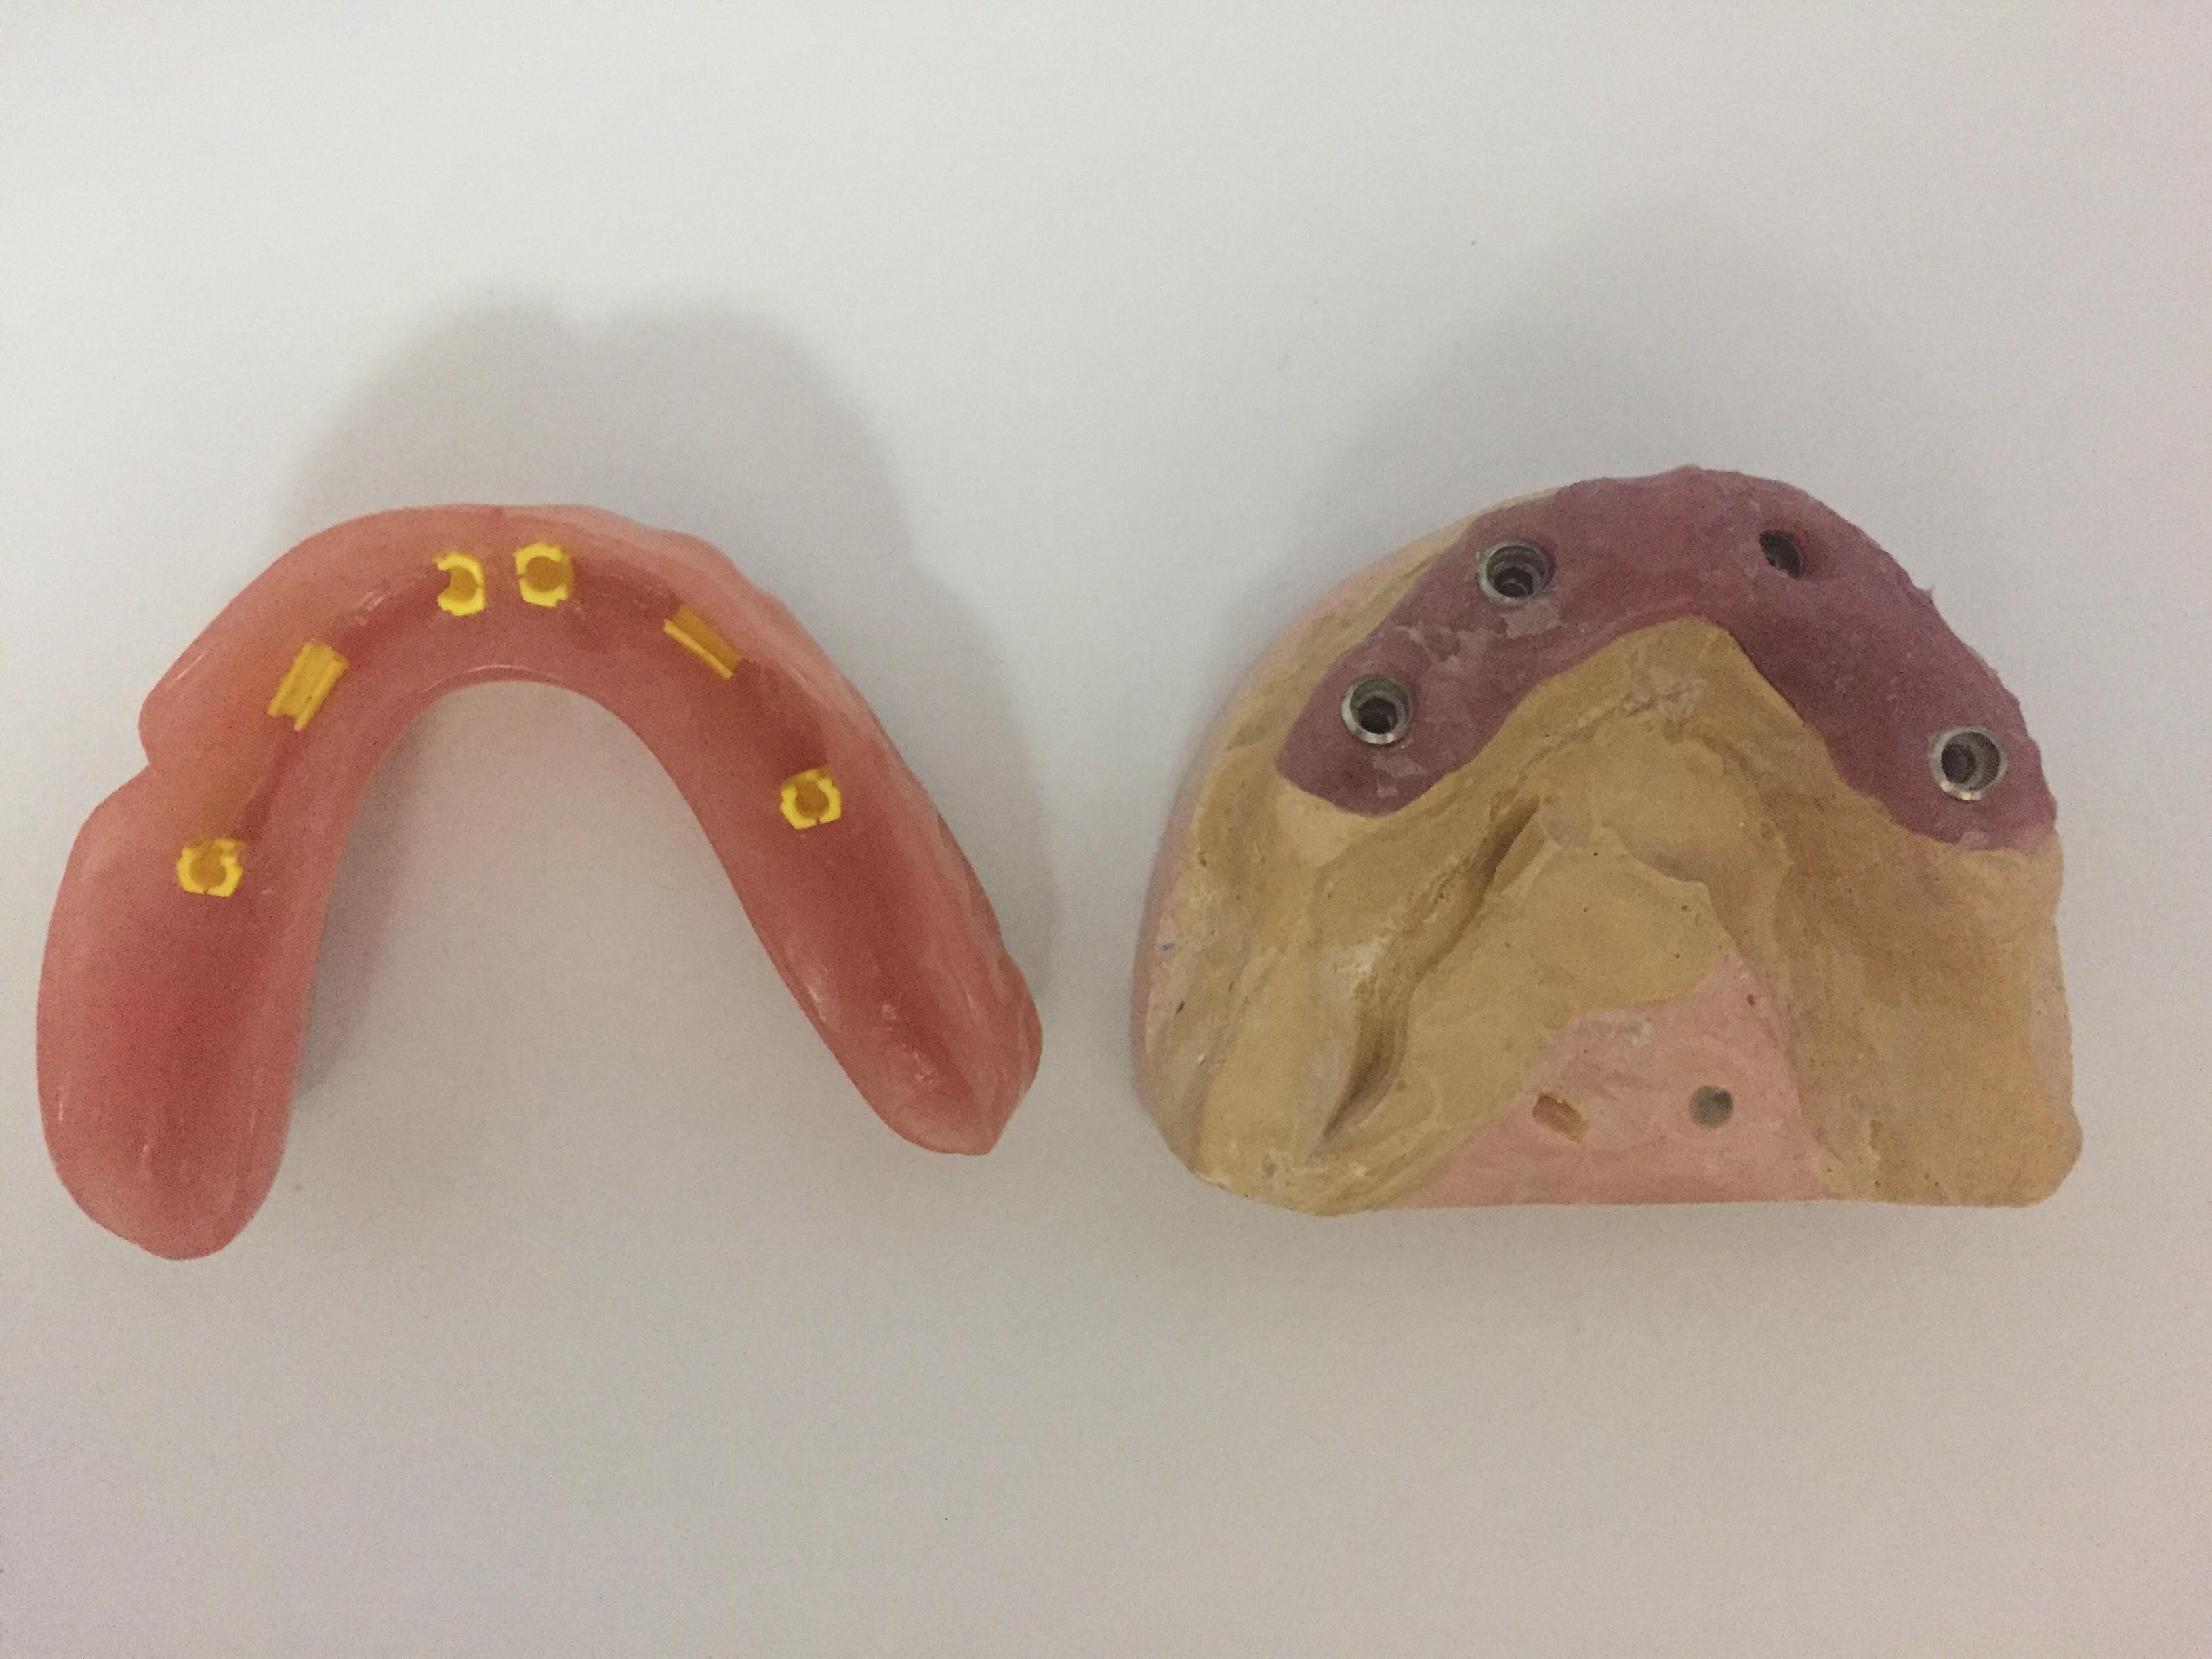 Images Laboratorio de Prótesis Dental Gloria Camacho